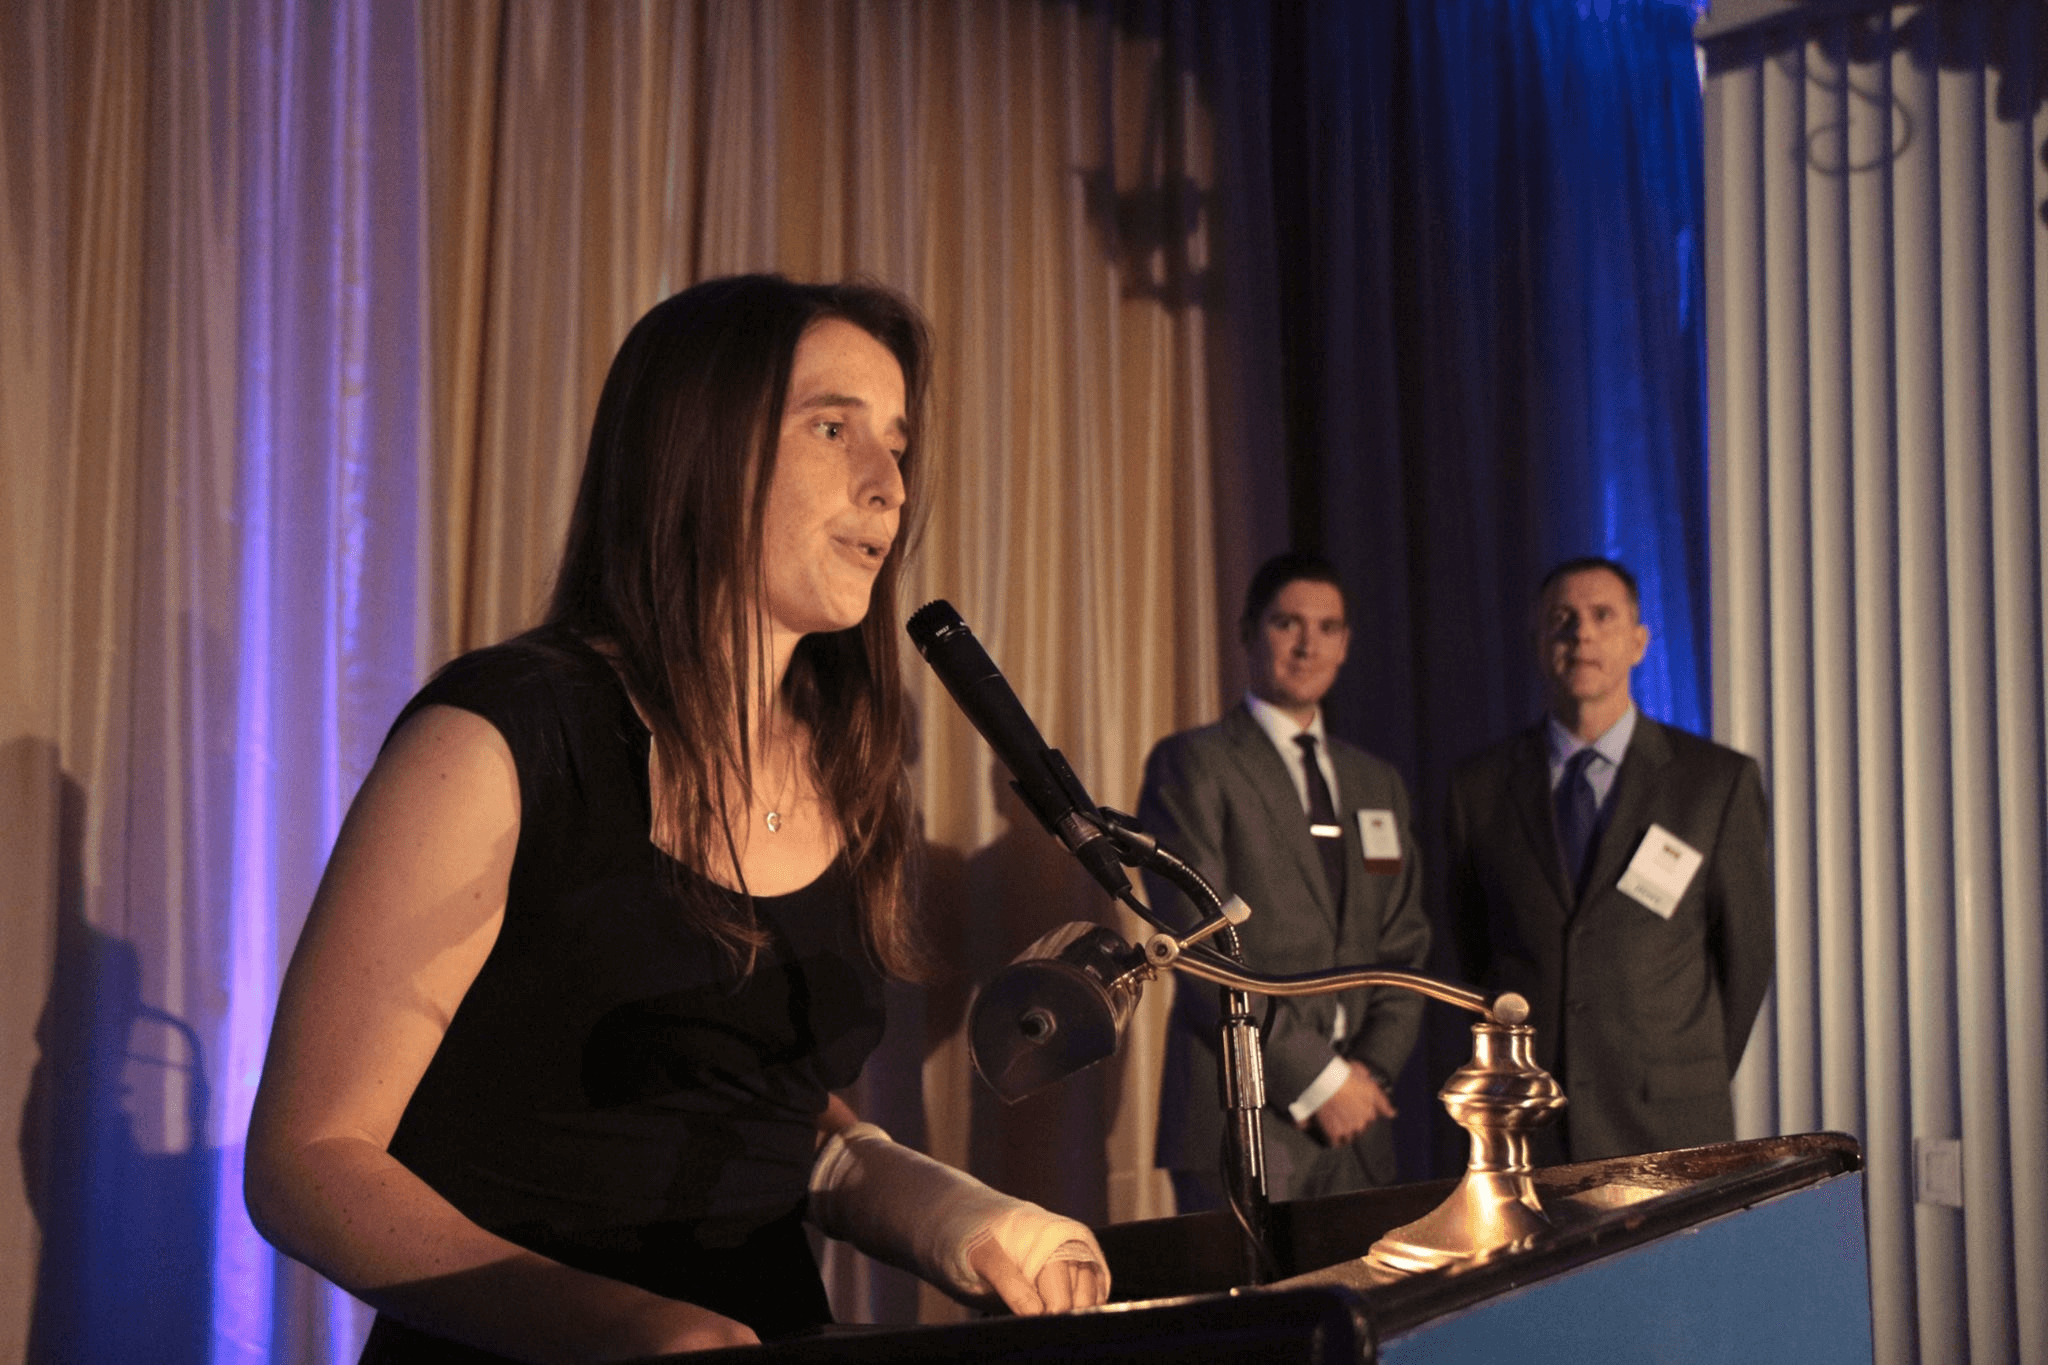 Tina Speaking at CTO Awards